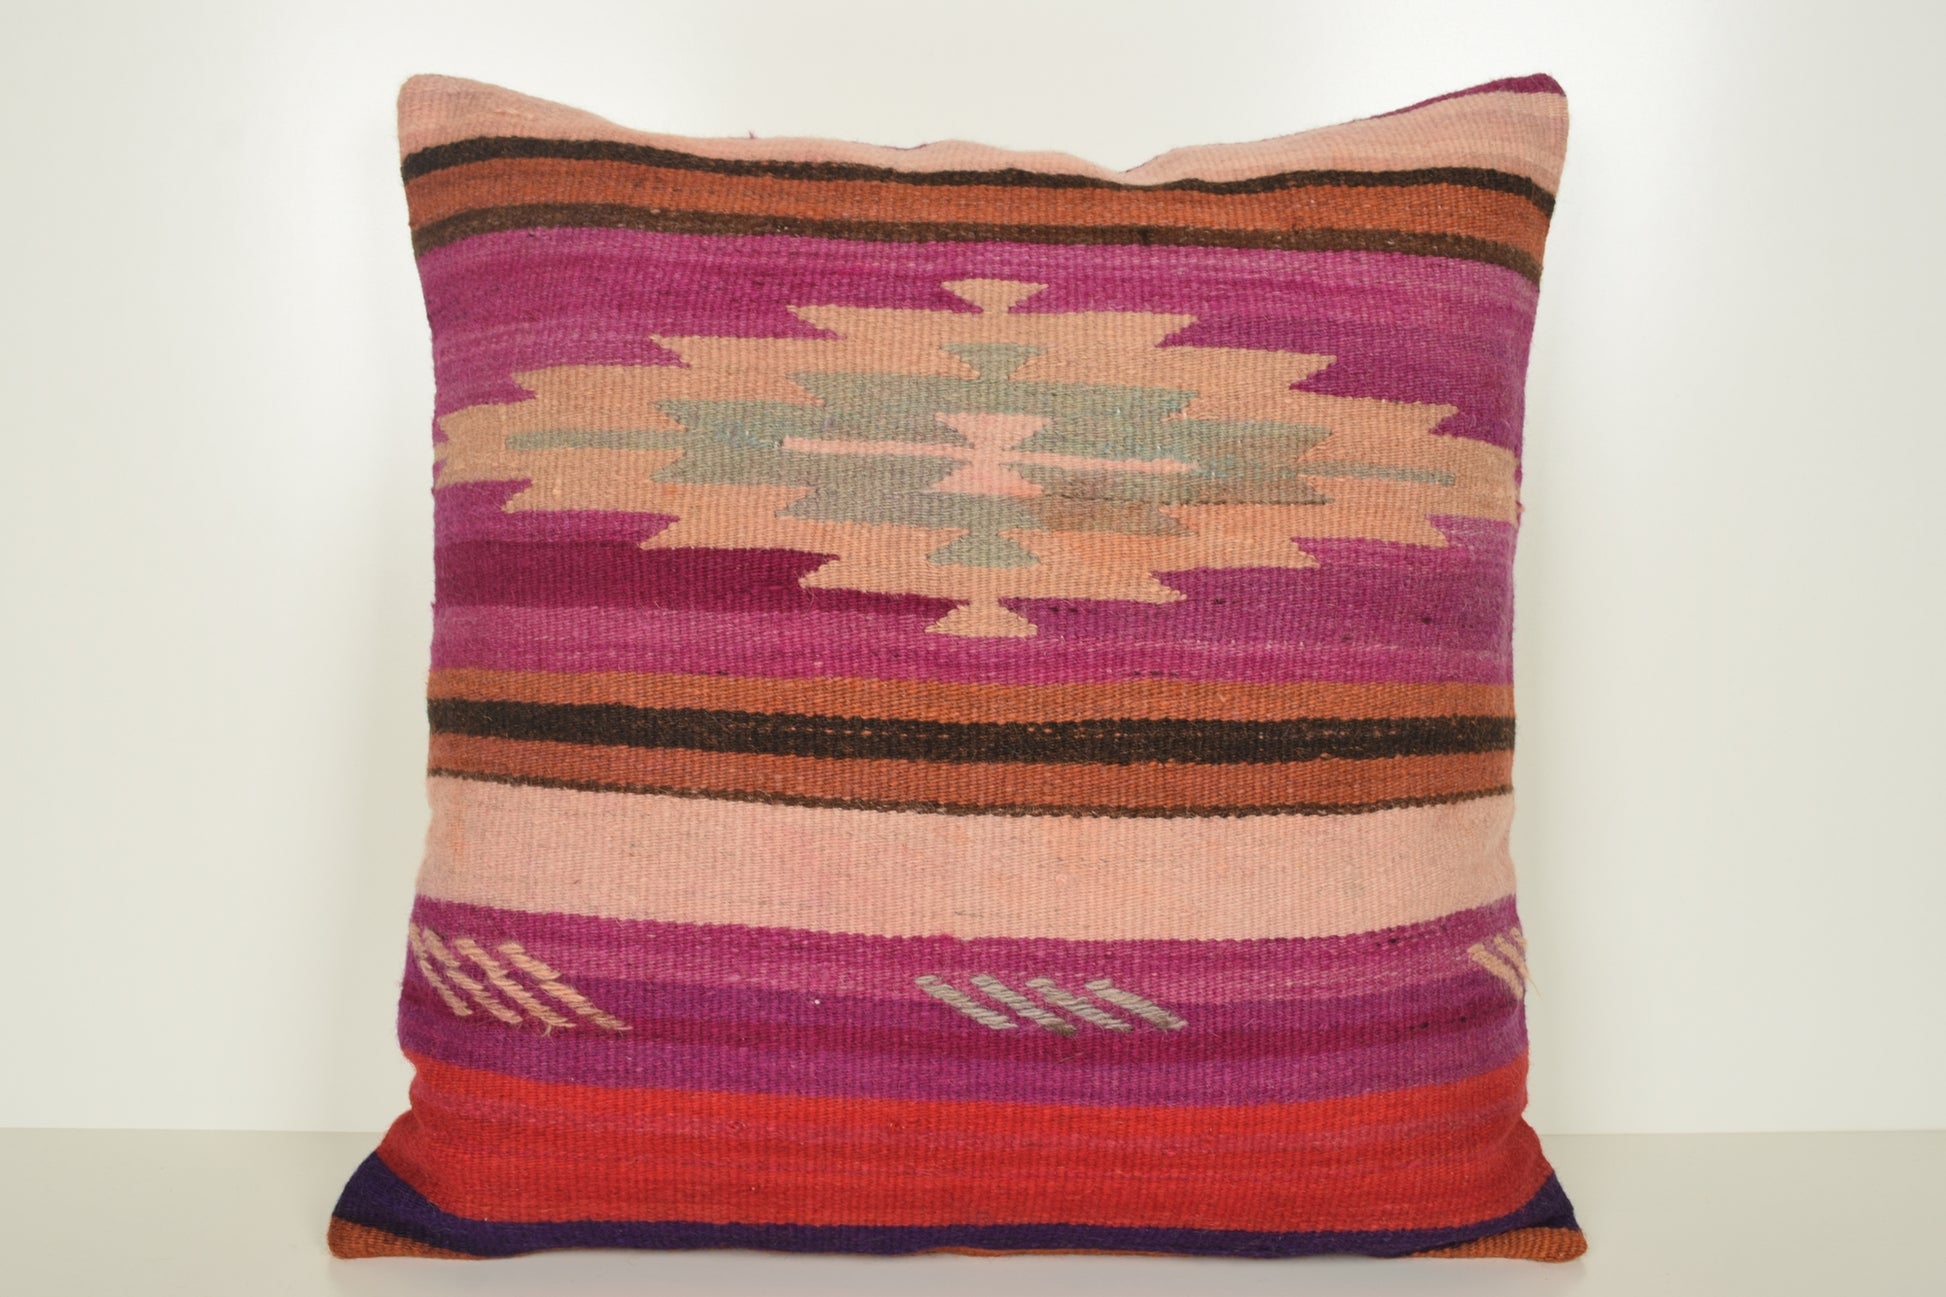 Turkish Floor Pillows A00801 Decorative Throw pillow case Knitting cushion covers 24x24